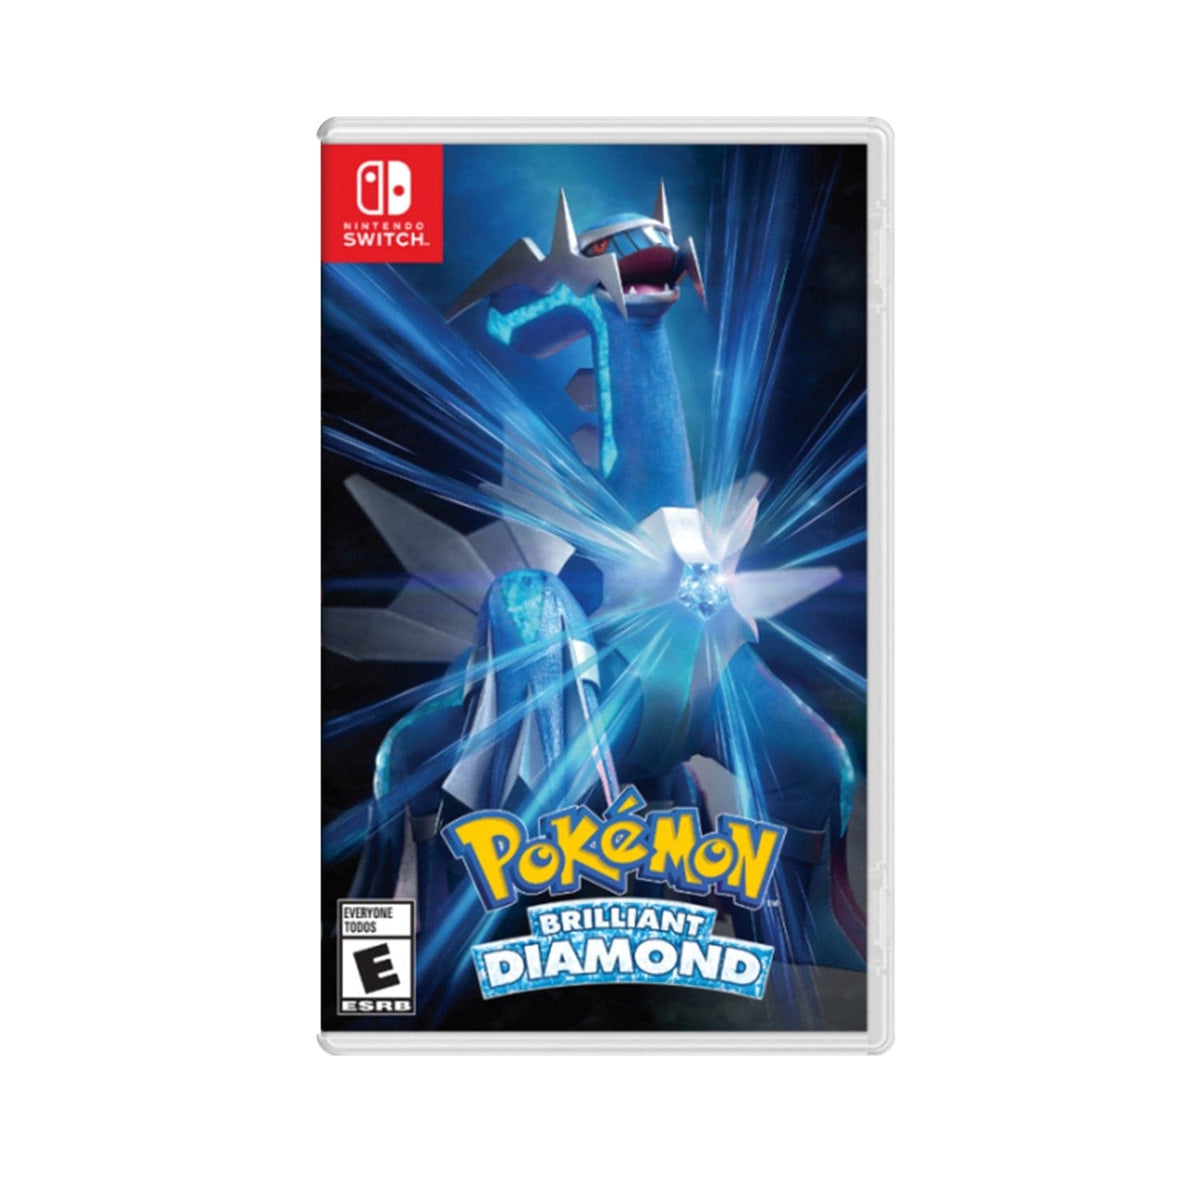 Nintendo Switch Pokemon Brilliant Diamond and Pokemon Shining Pearl Double Pack